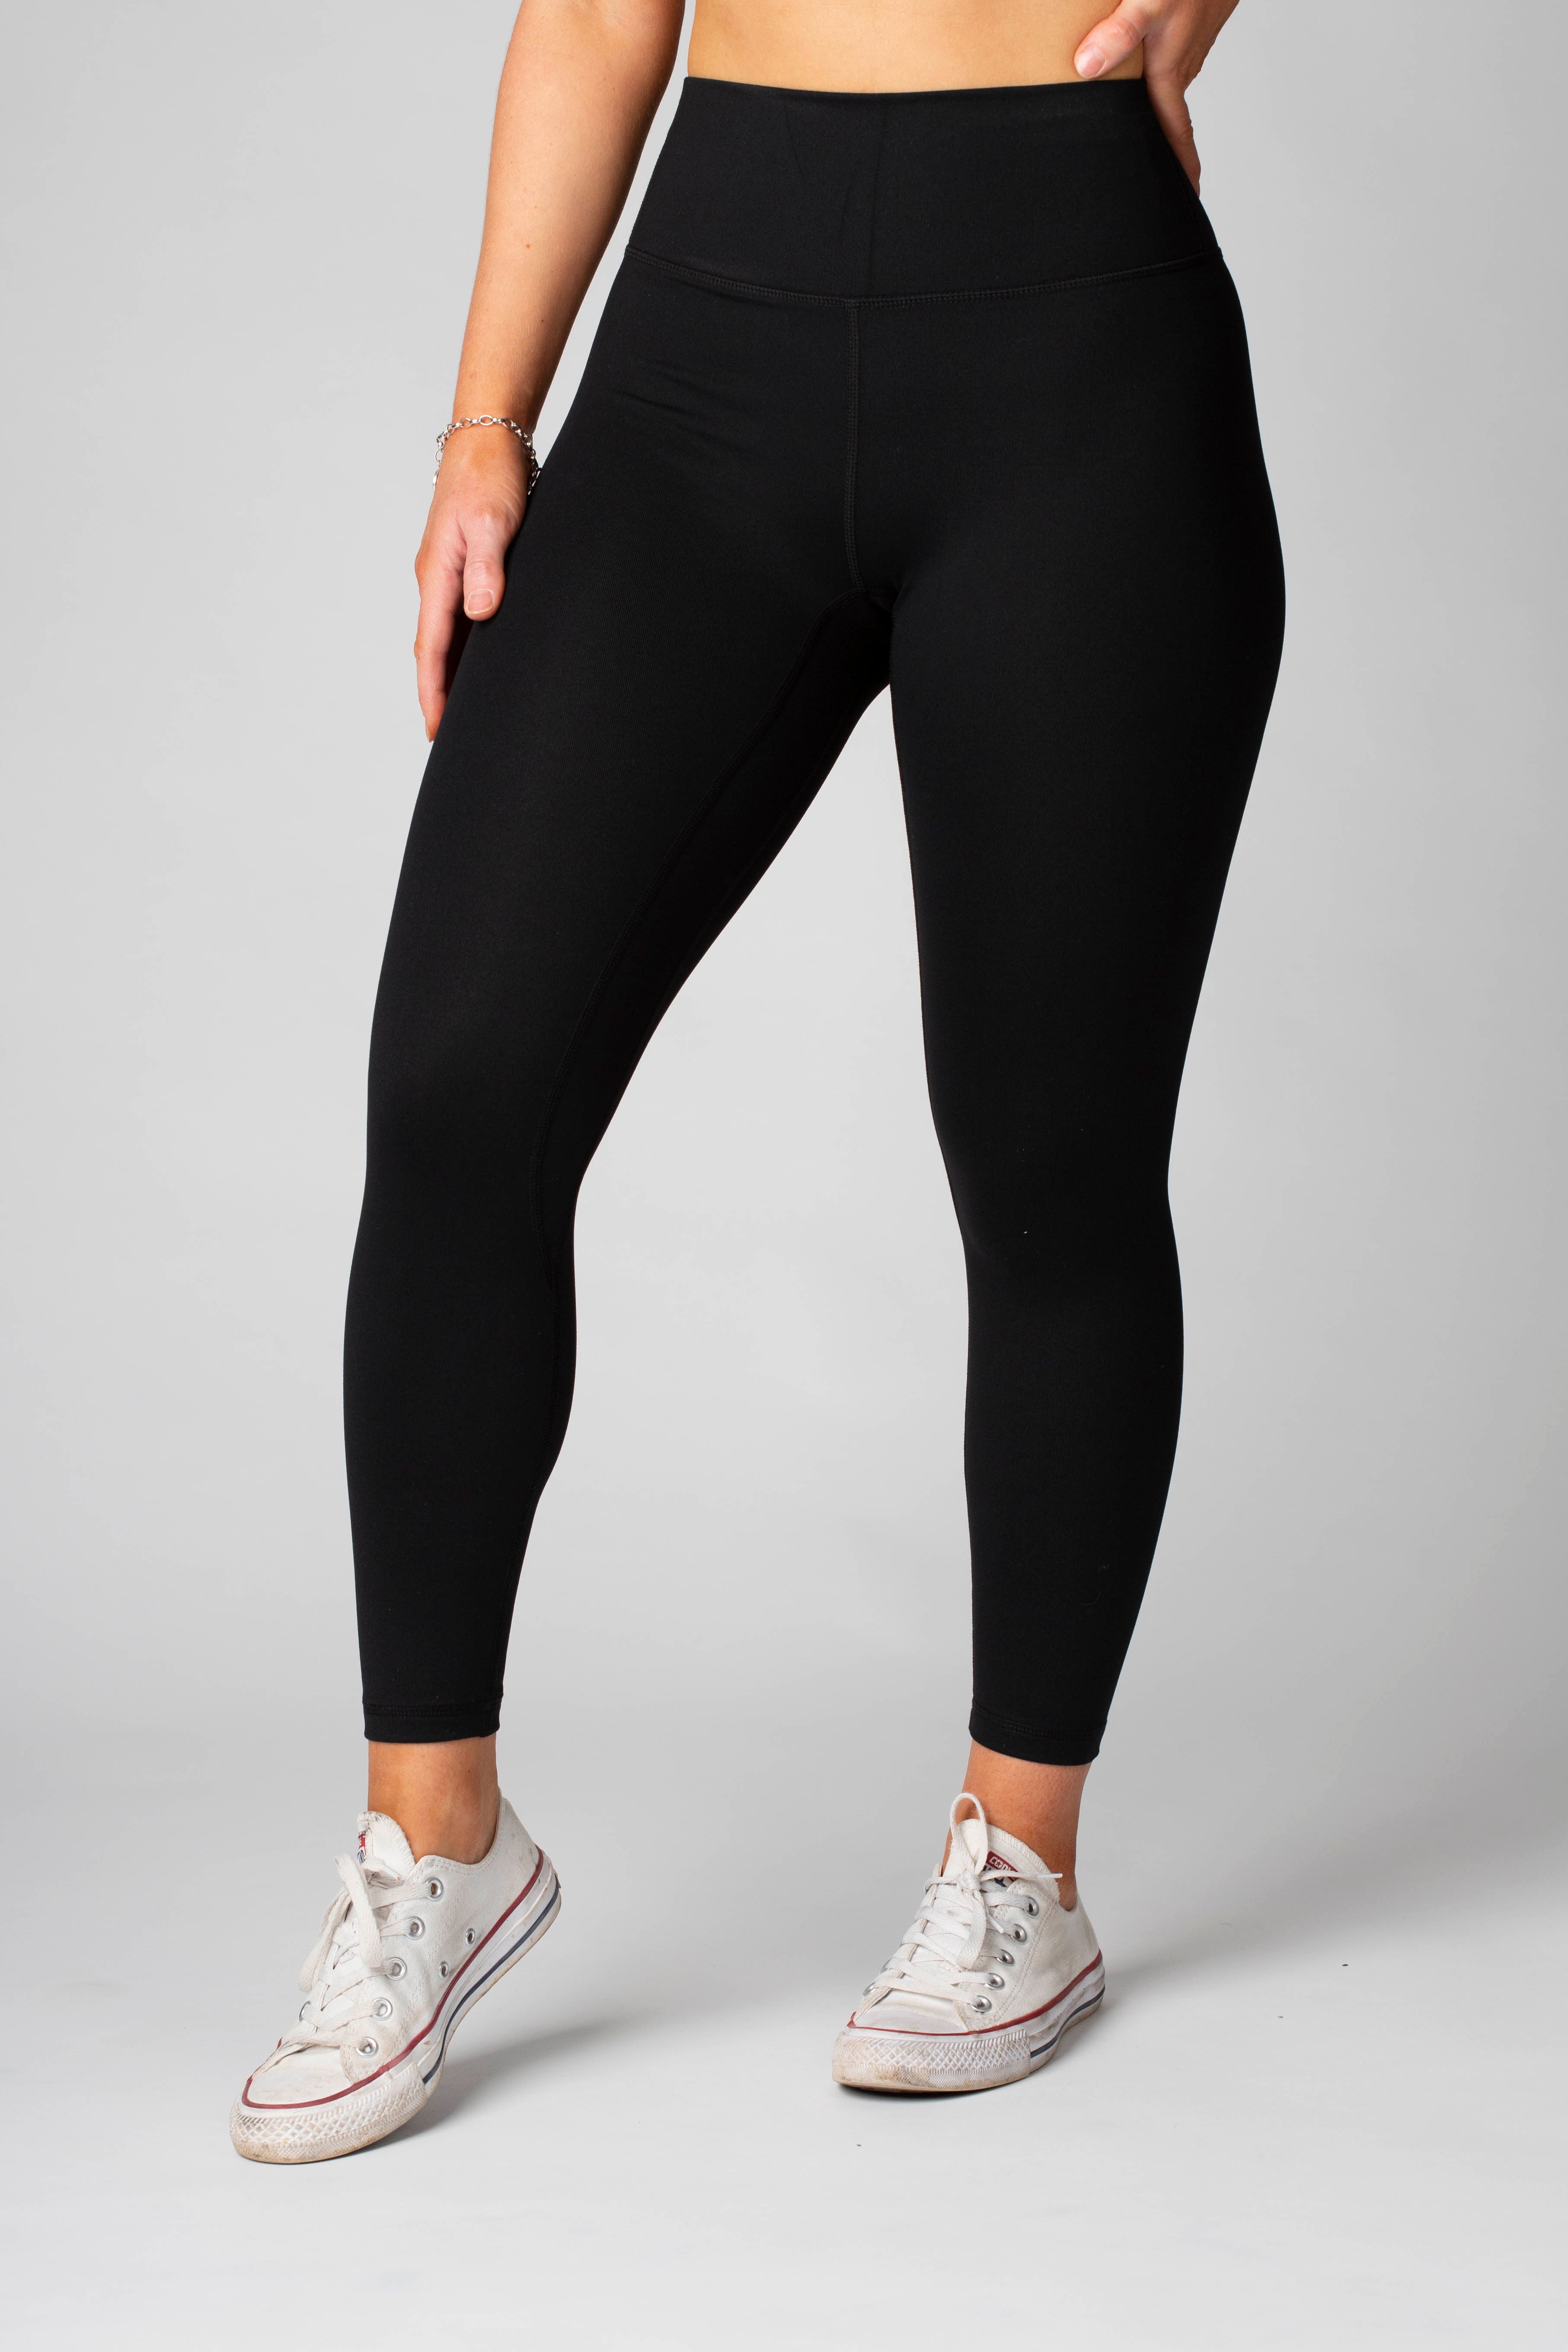 High Waist Leggings Petite and Plus Size Yoga Pants – KesleyBoutique